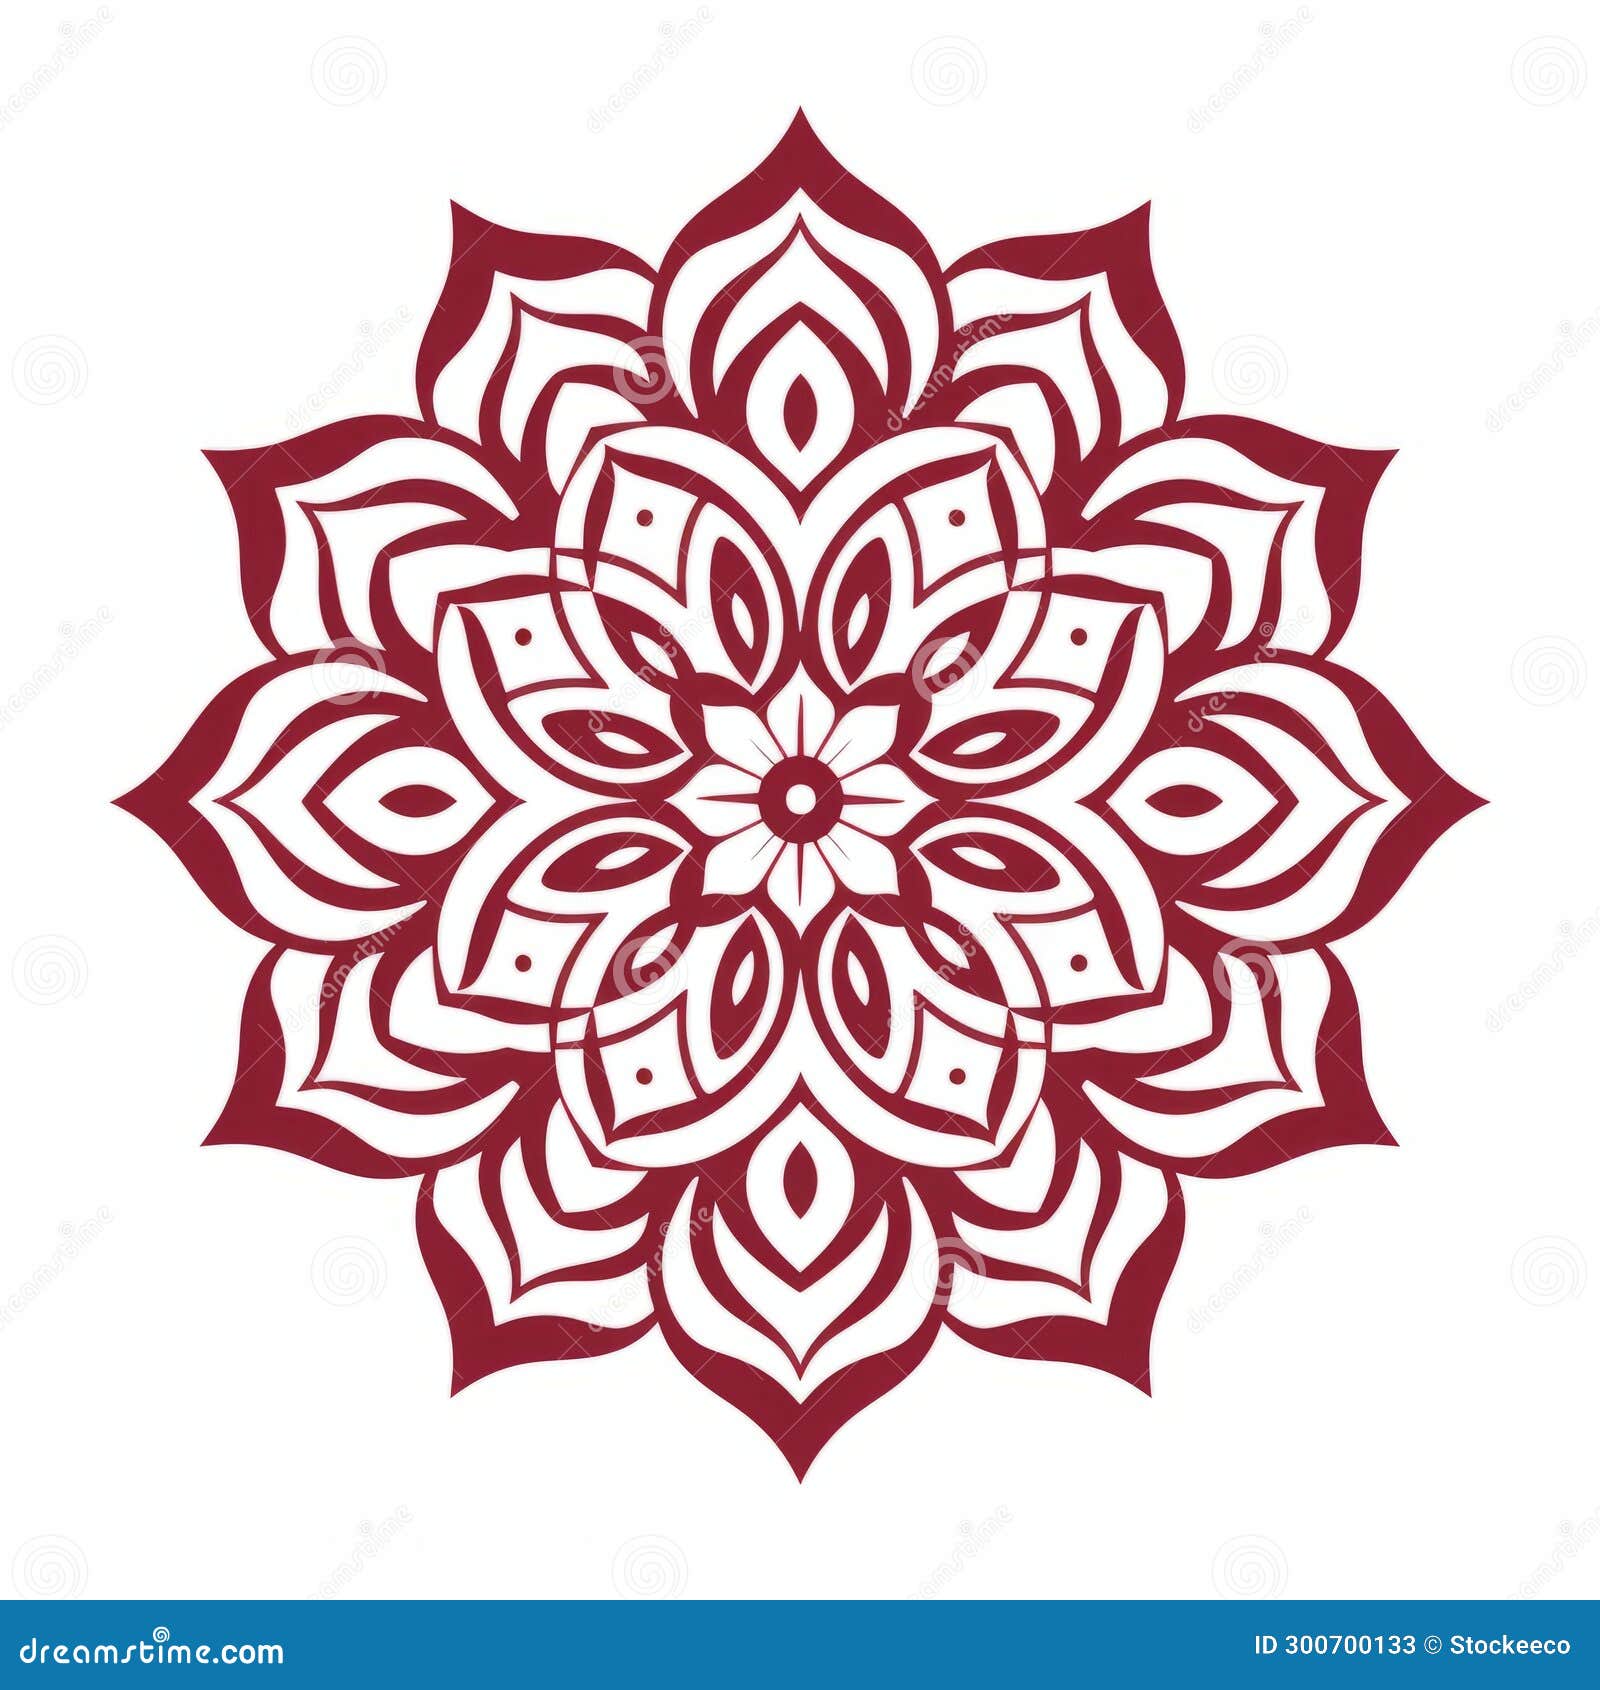 red flowering pattern mandala on white background